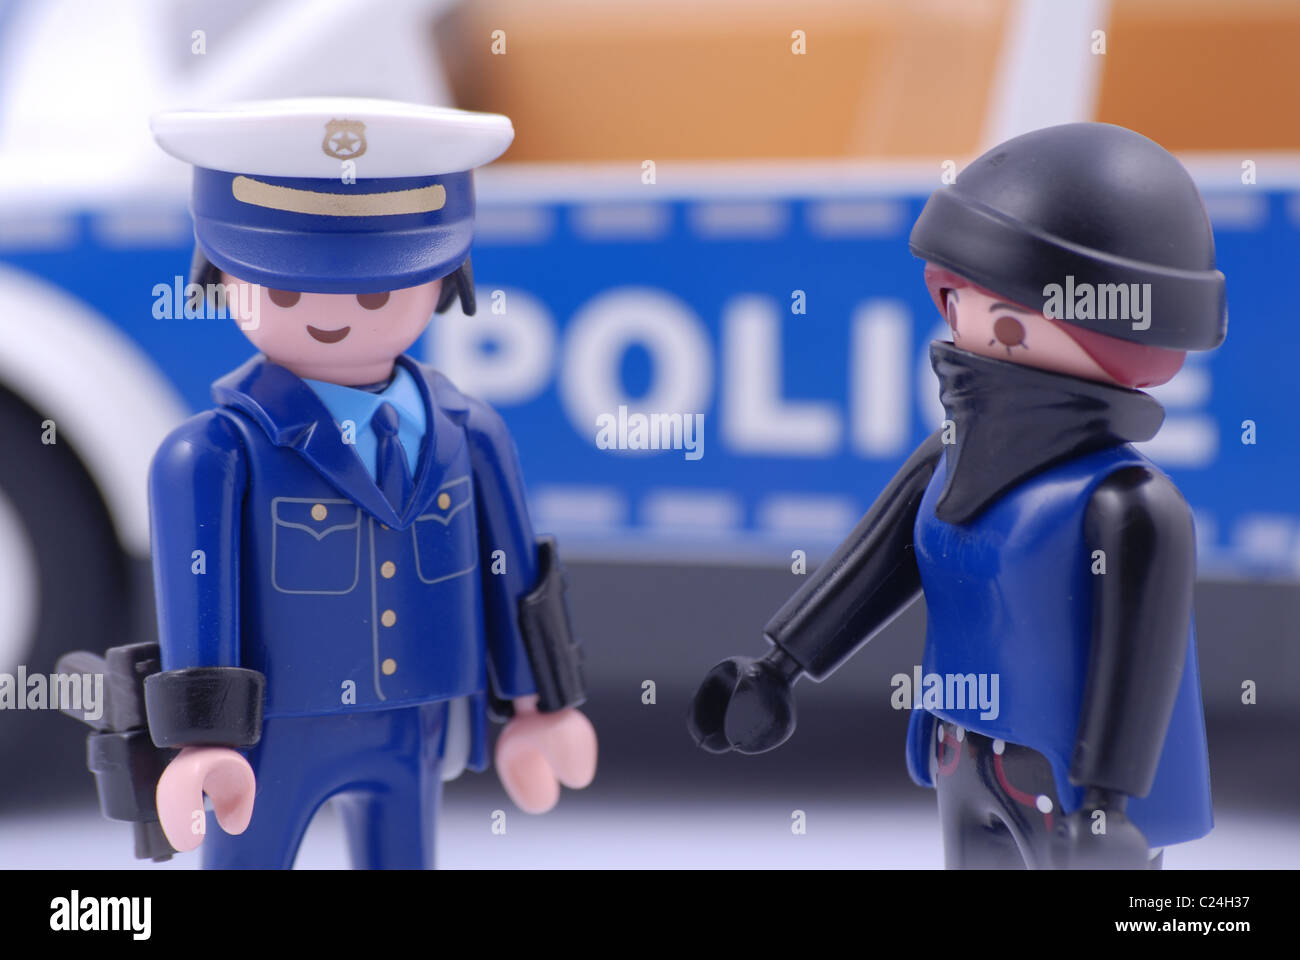 Playmobil Black & Blue Police Officer